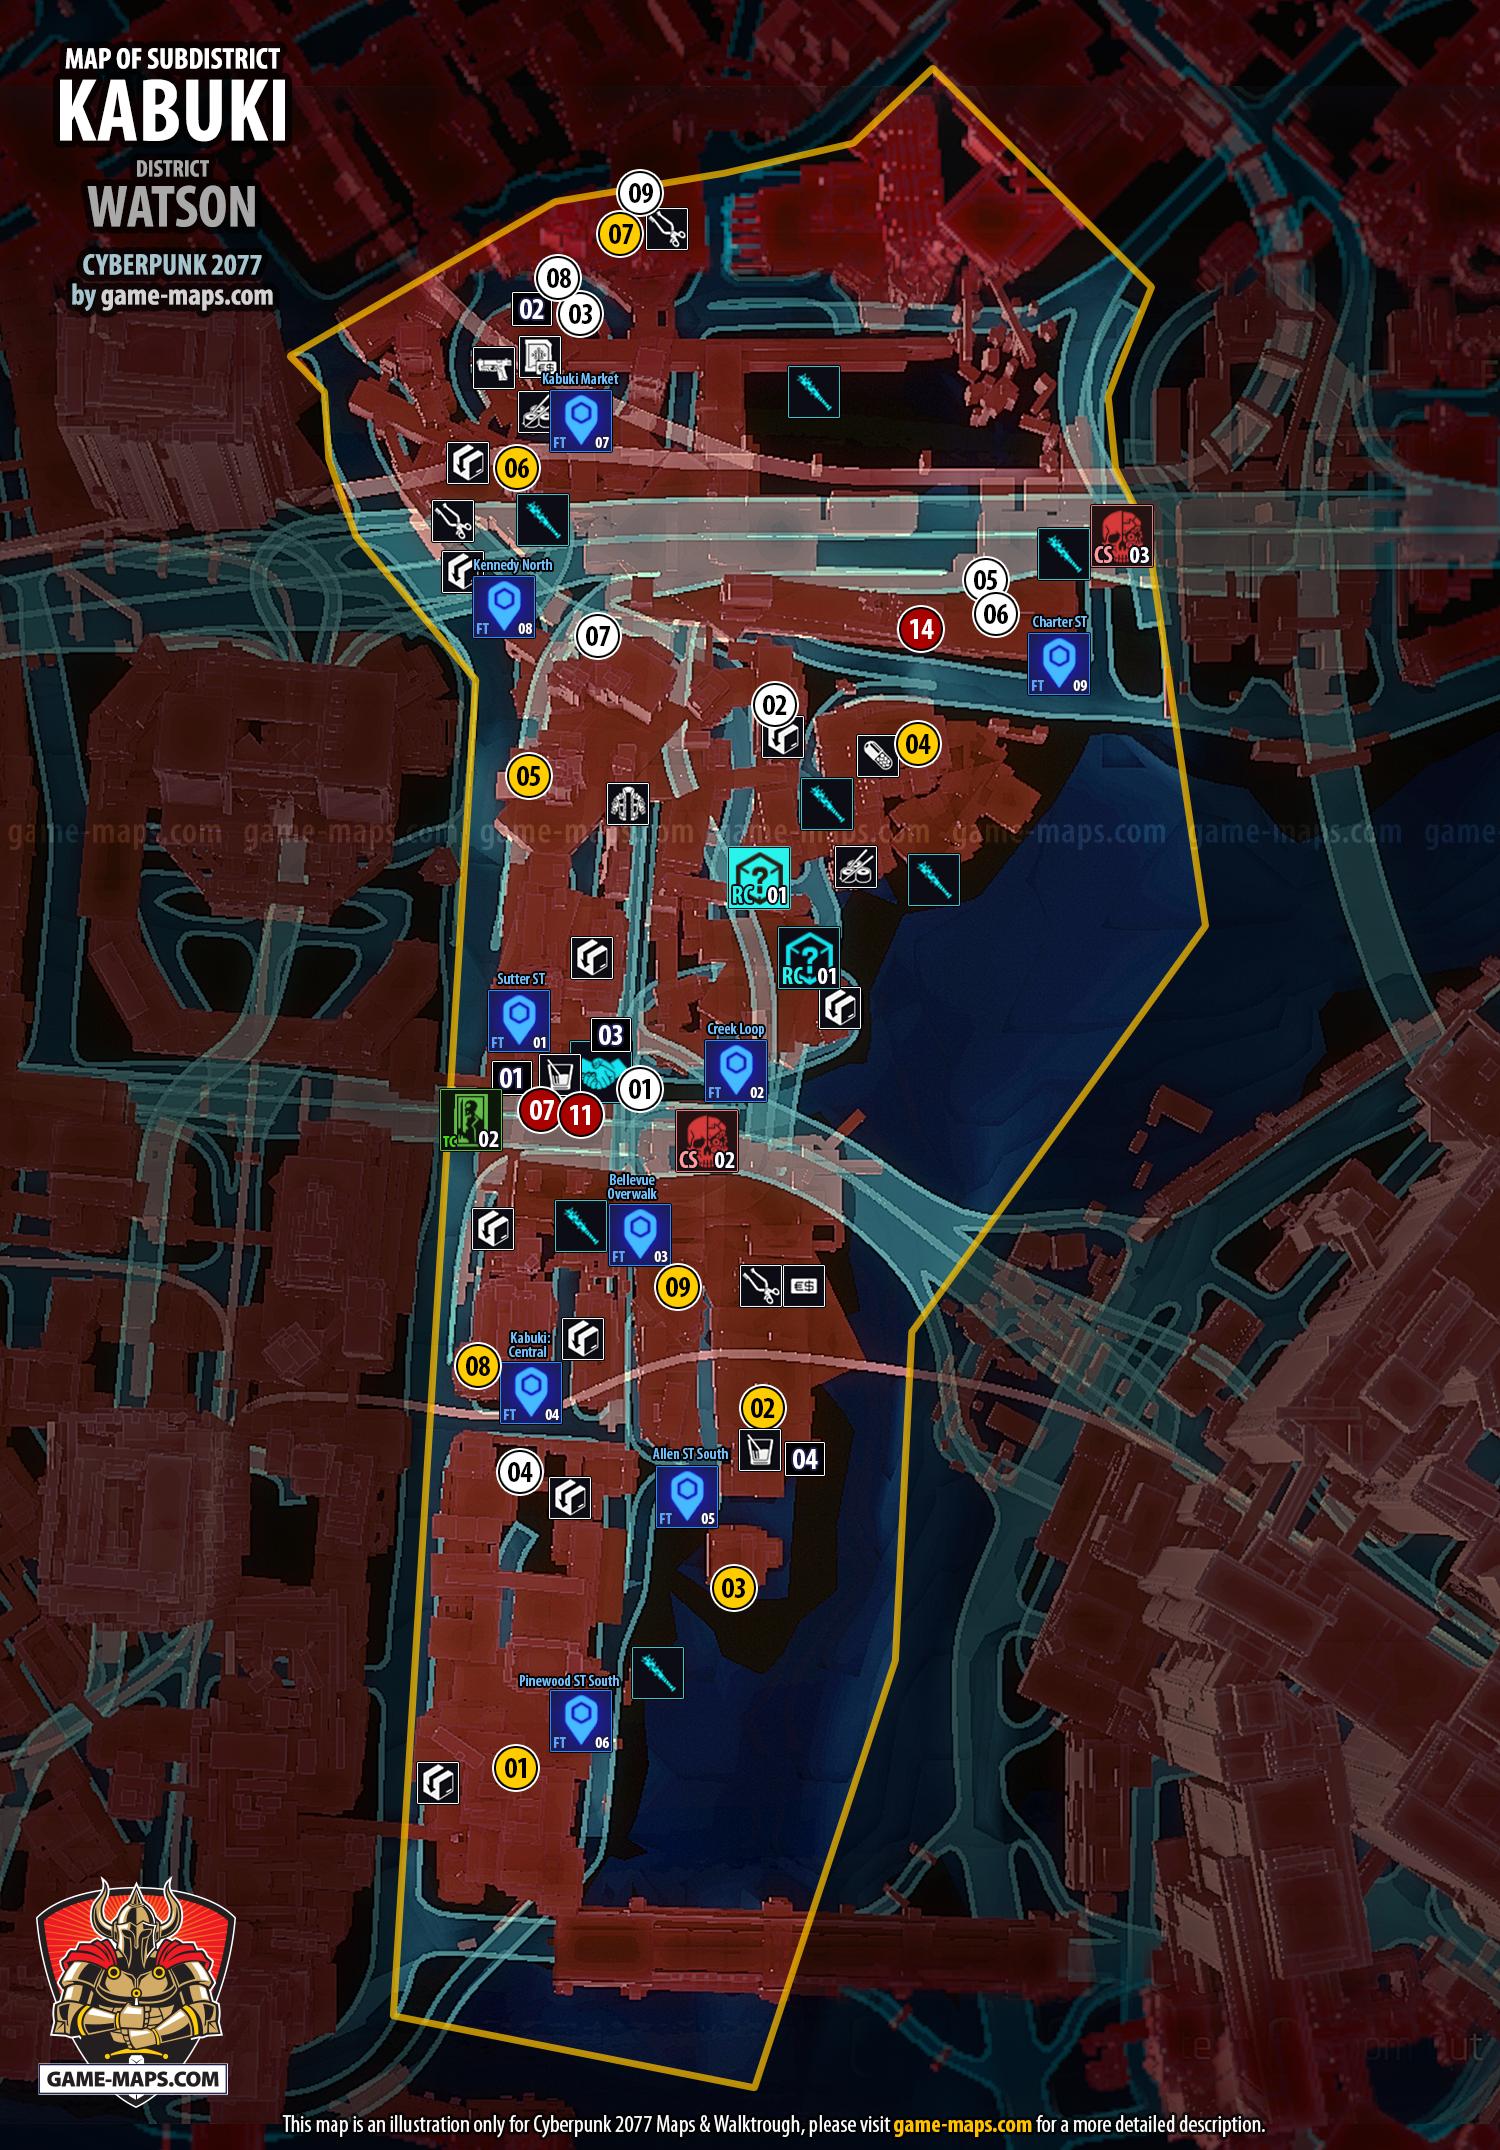 Kabuki Map in Watson District - Cyberpunk 2077